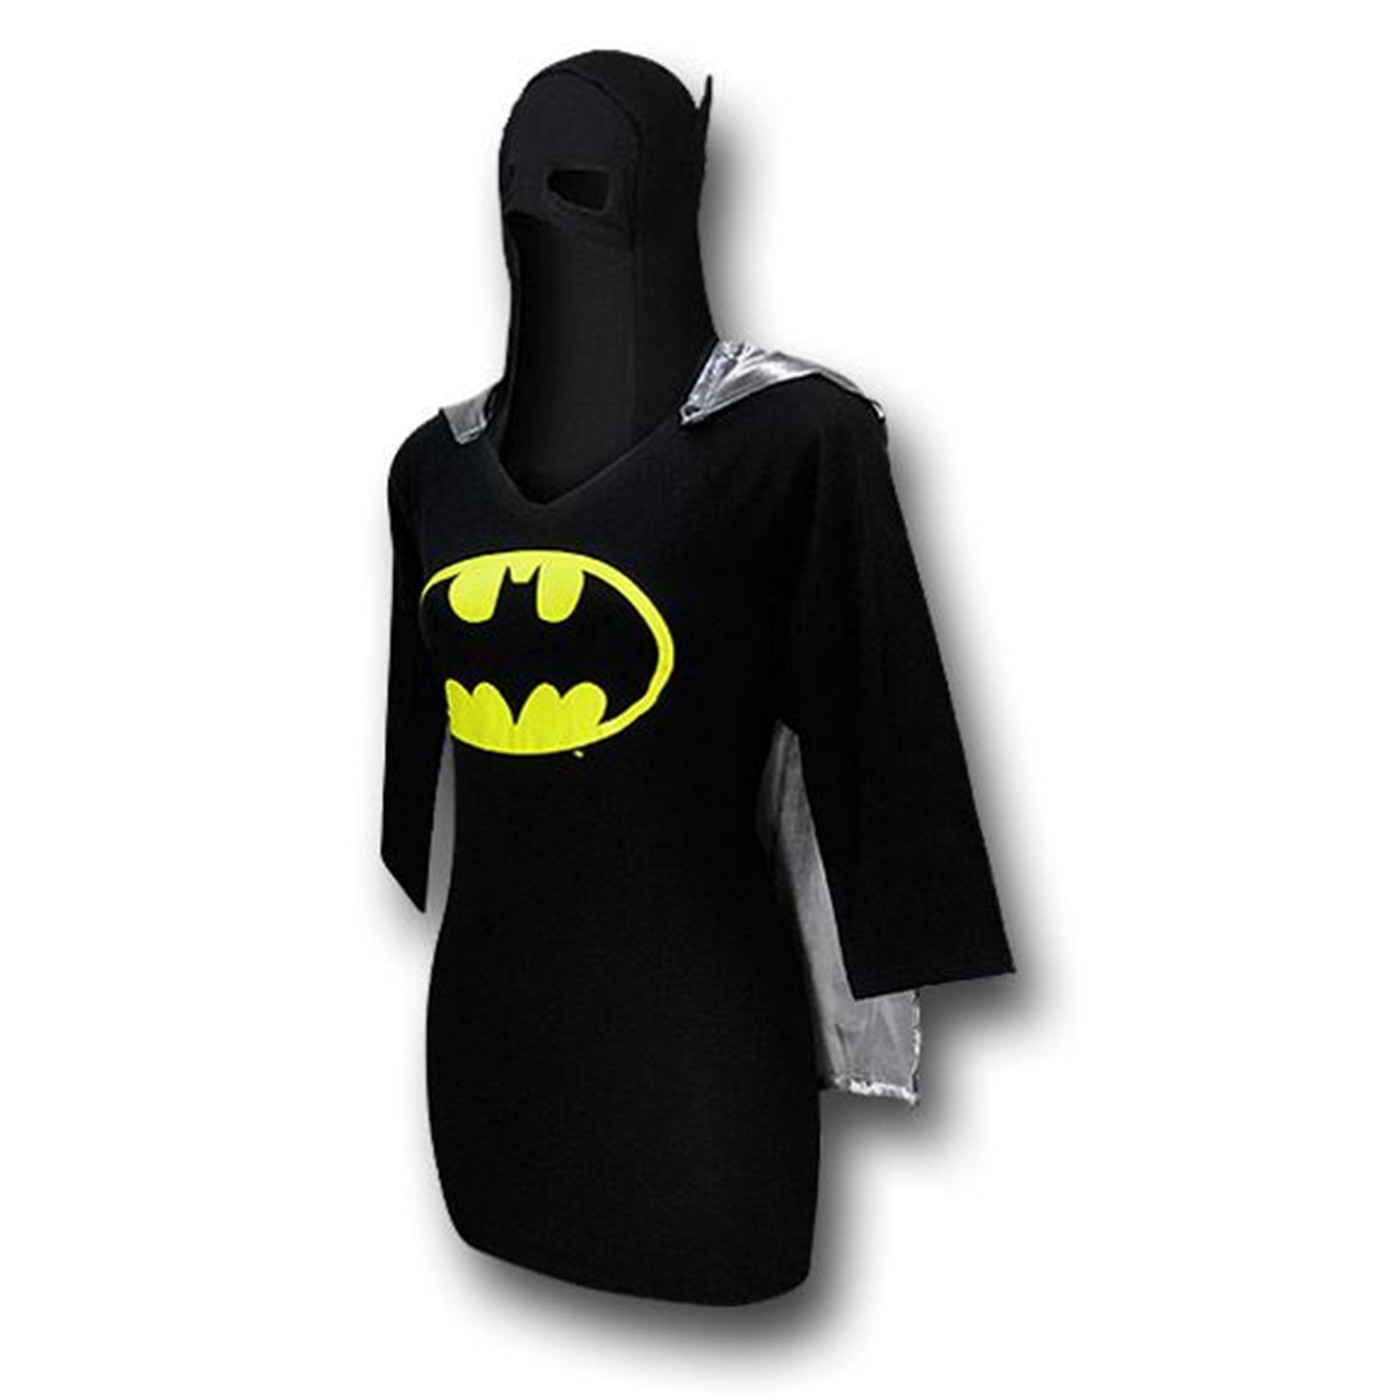 Batgirl Women's Night Shirt w/Hood and Cape